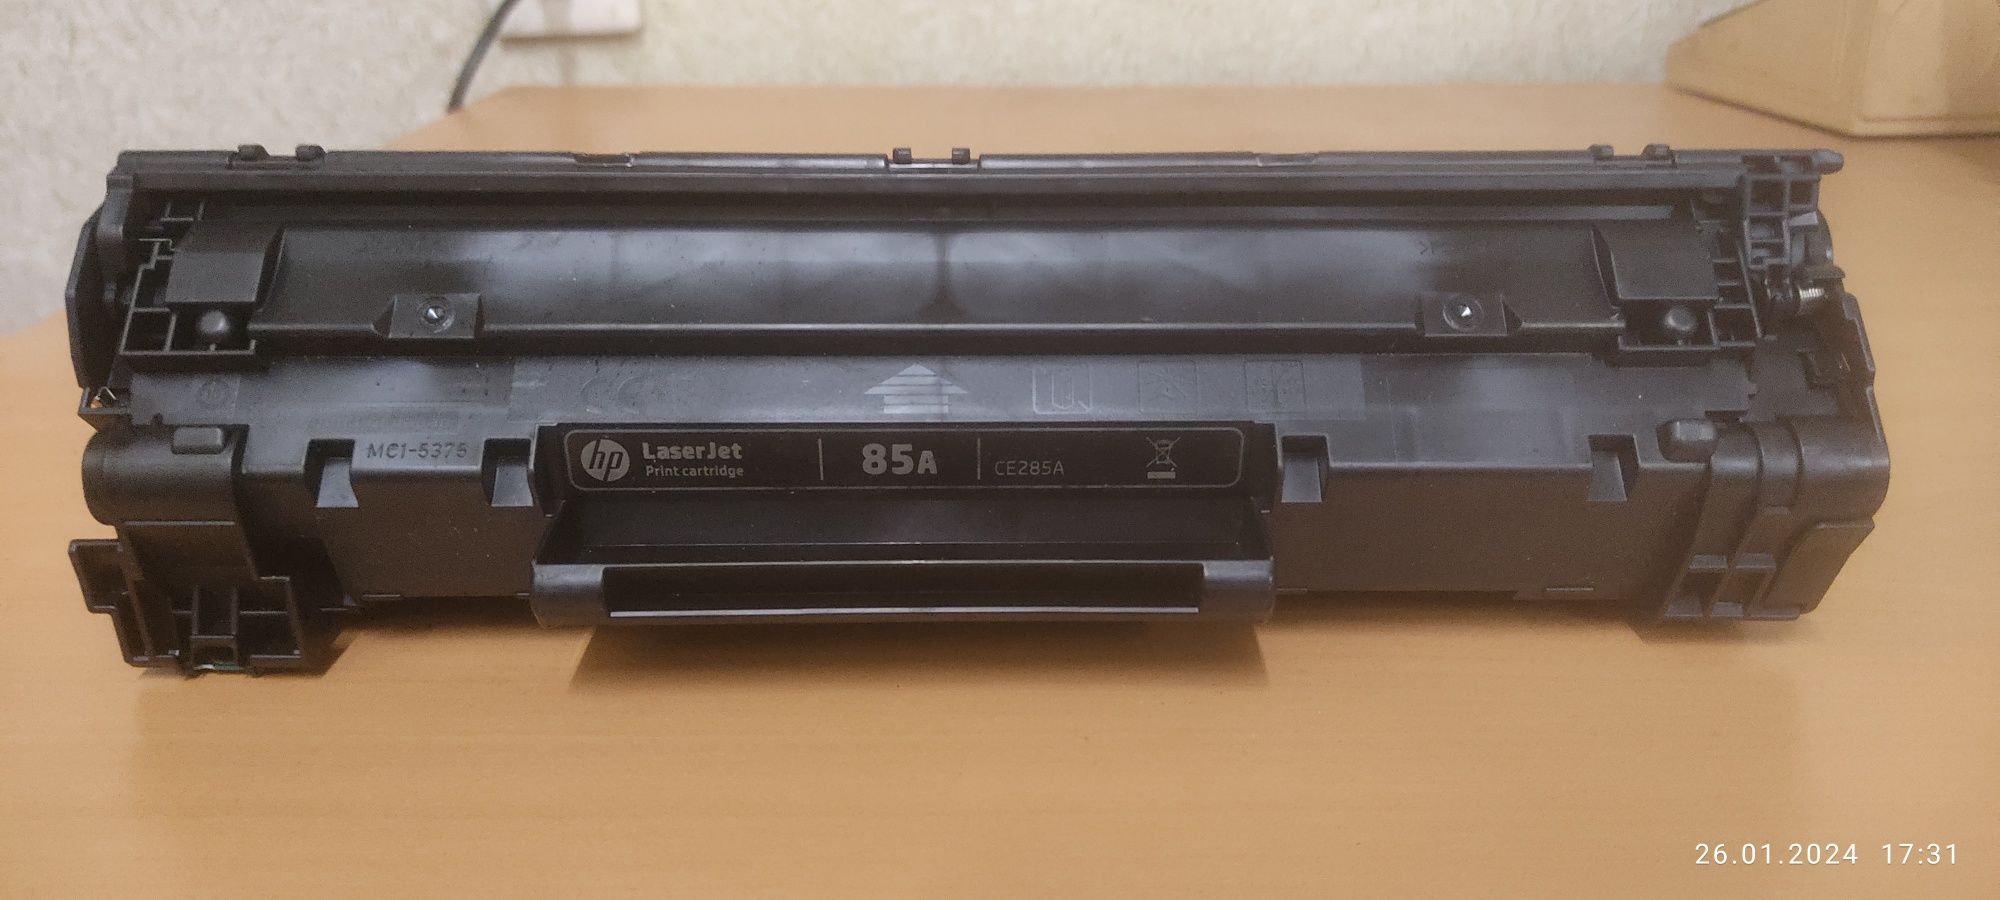 Картридж HP 85a(CE285A) для принтера LJP1102, M1212nf, M1213nf